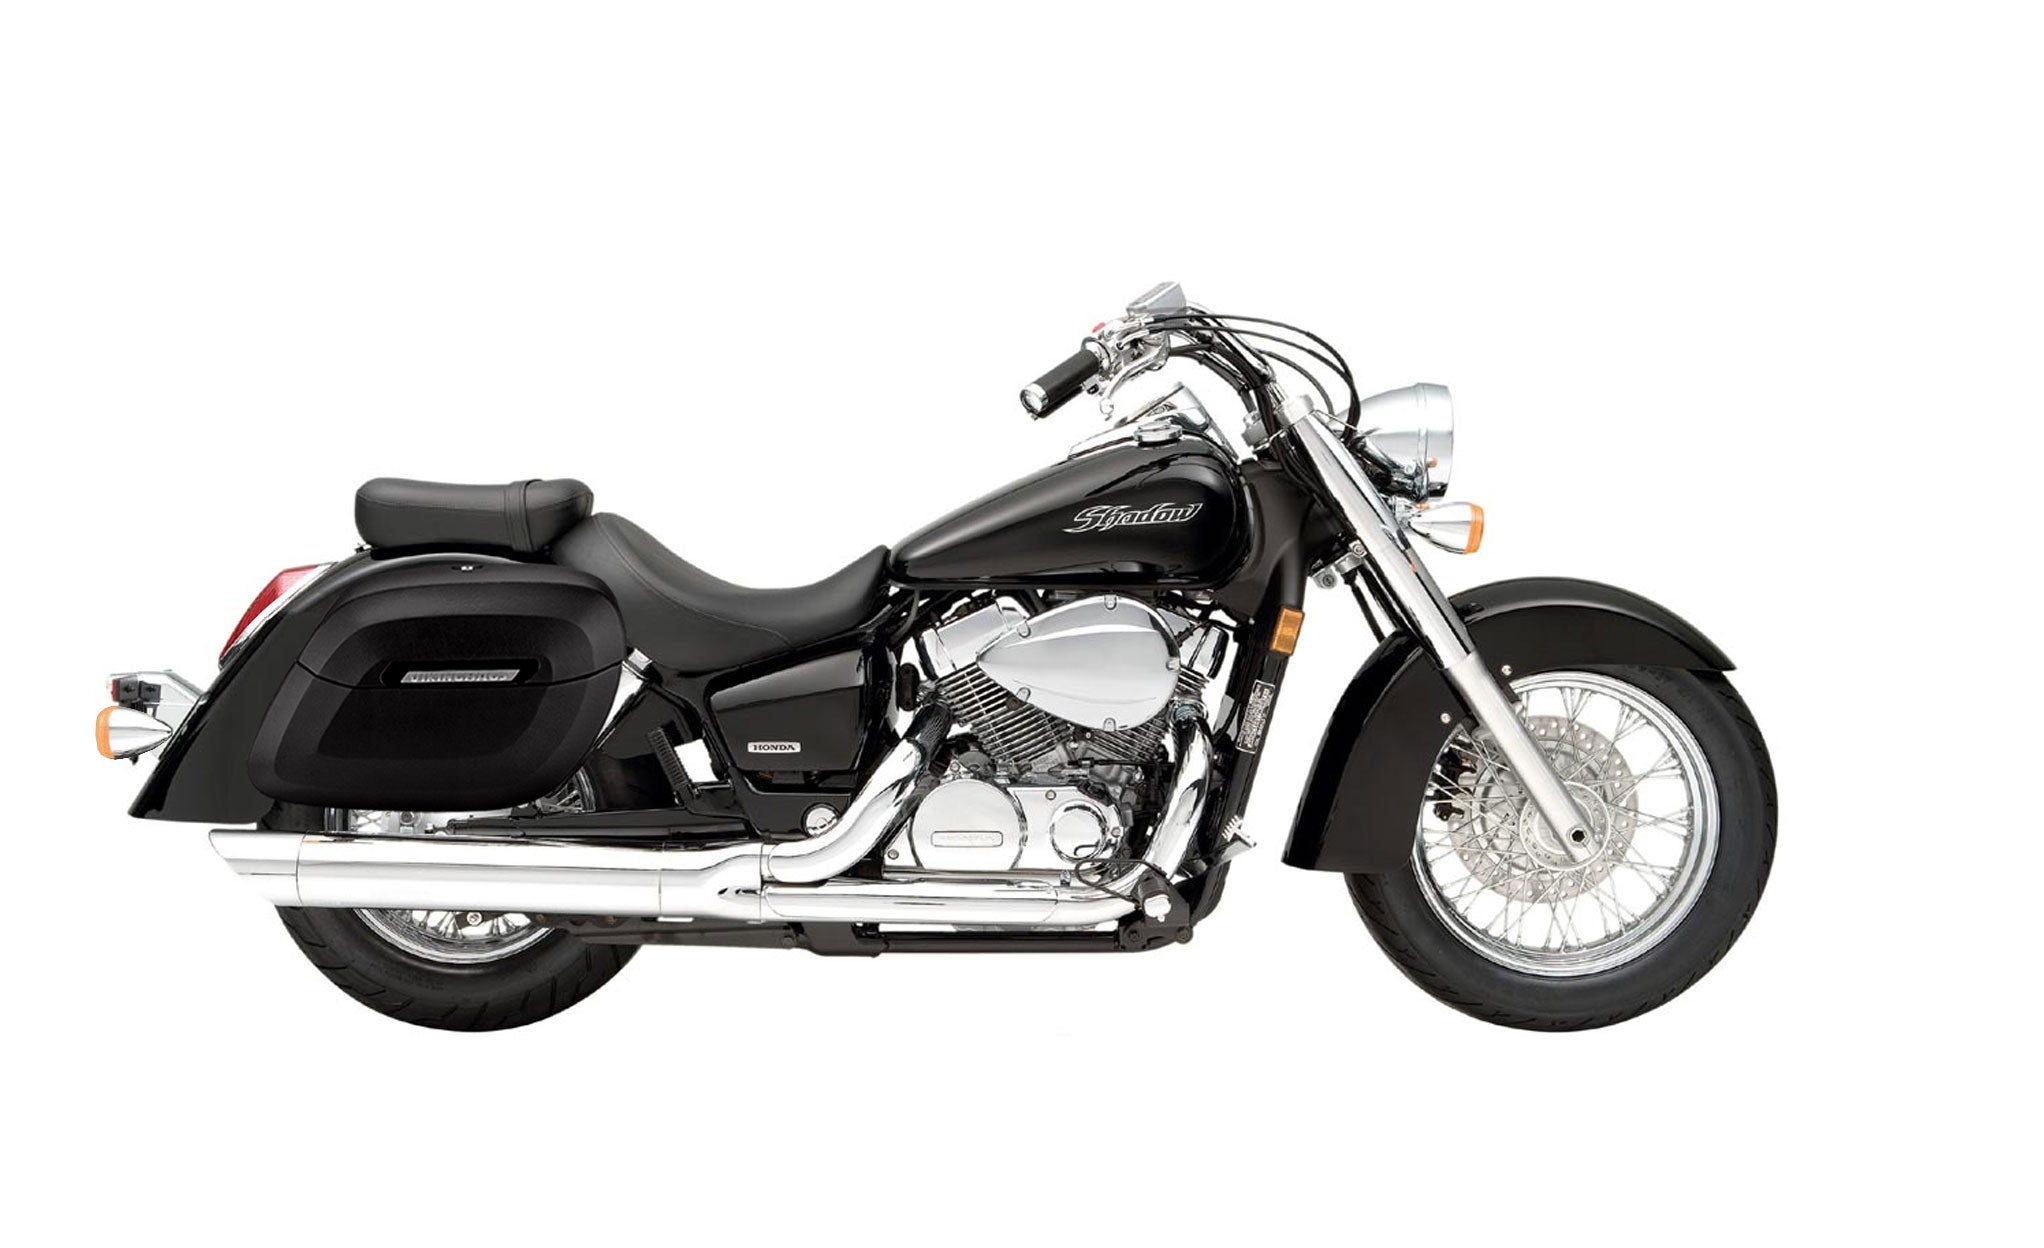 Viking Lamellar Raven Extra Large Honda Shadow 750 Aero Shock Cutout Matte Motorcycle Hard Saddlebags on Bike Photo @expand